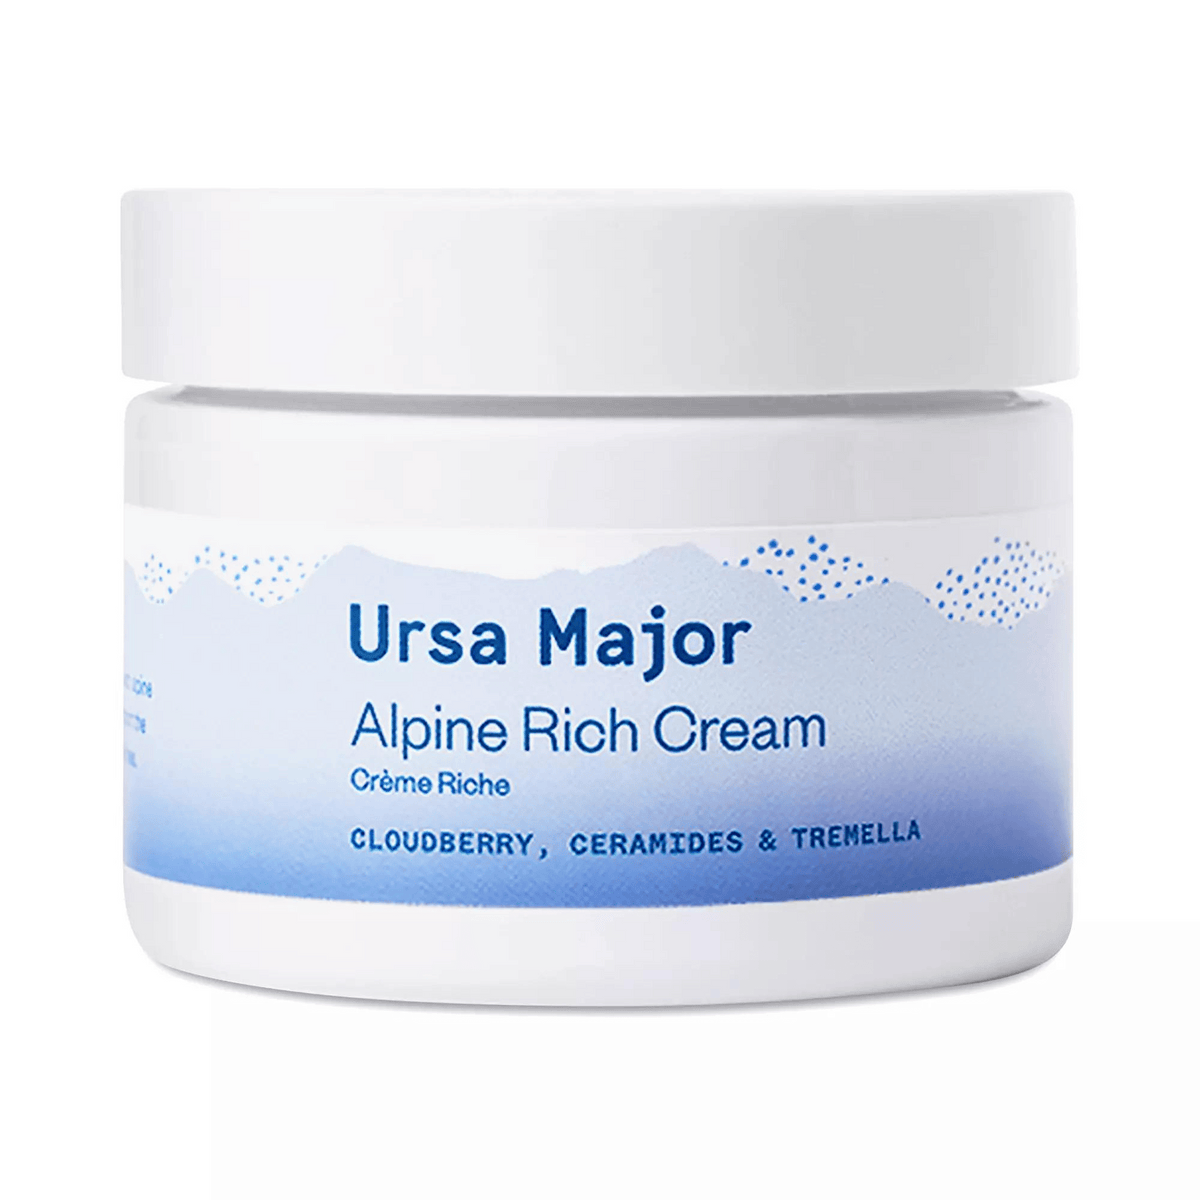 Primary Image of Alpine Rich Cream